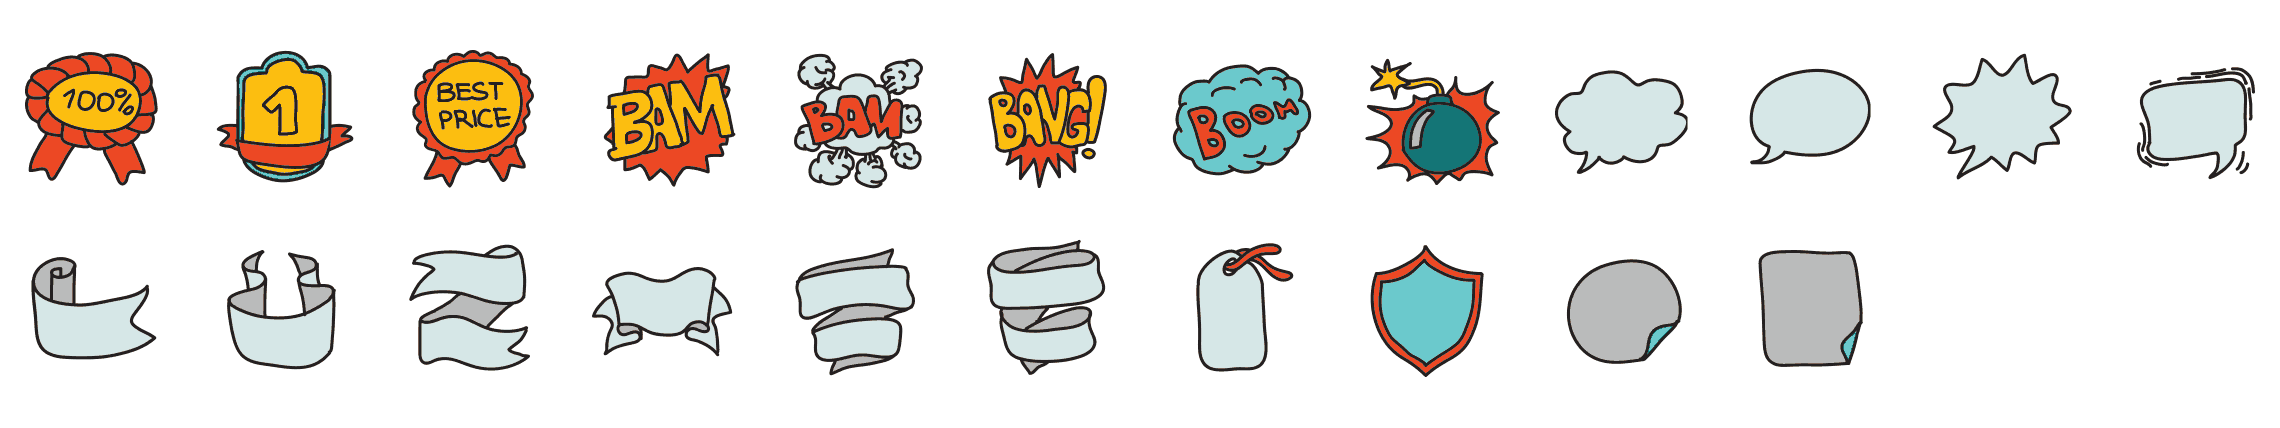 Labels-doodle-icons